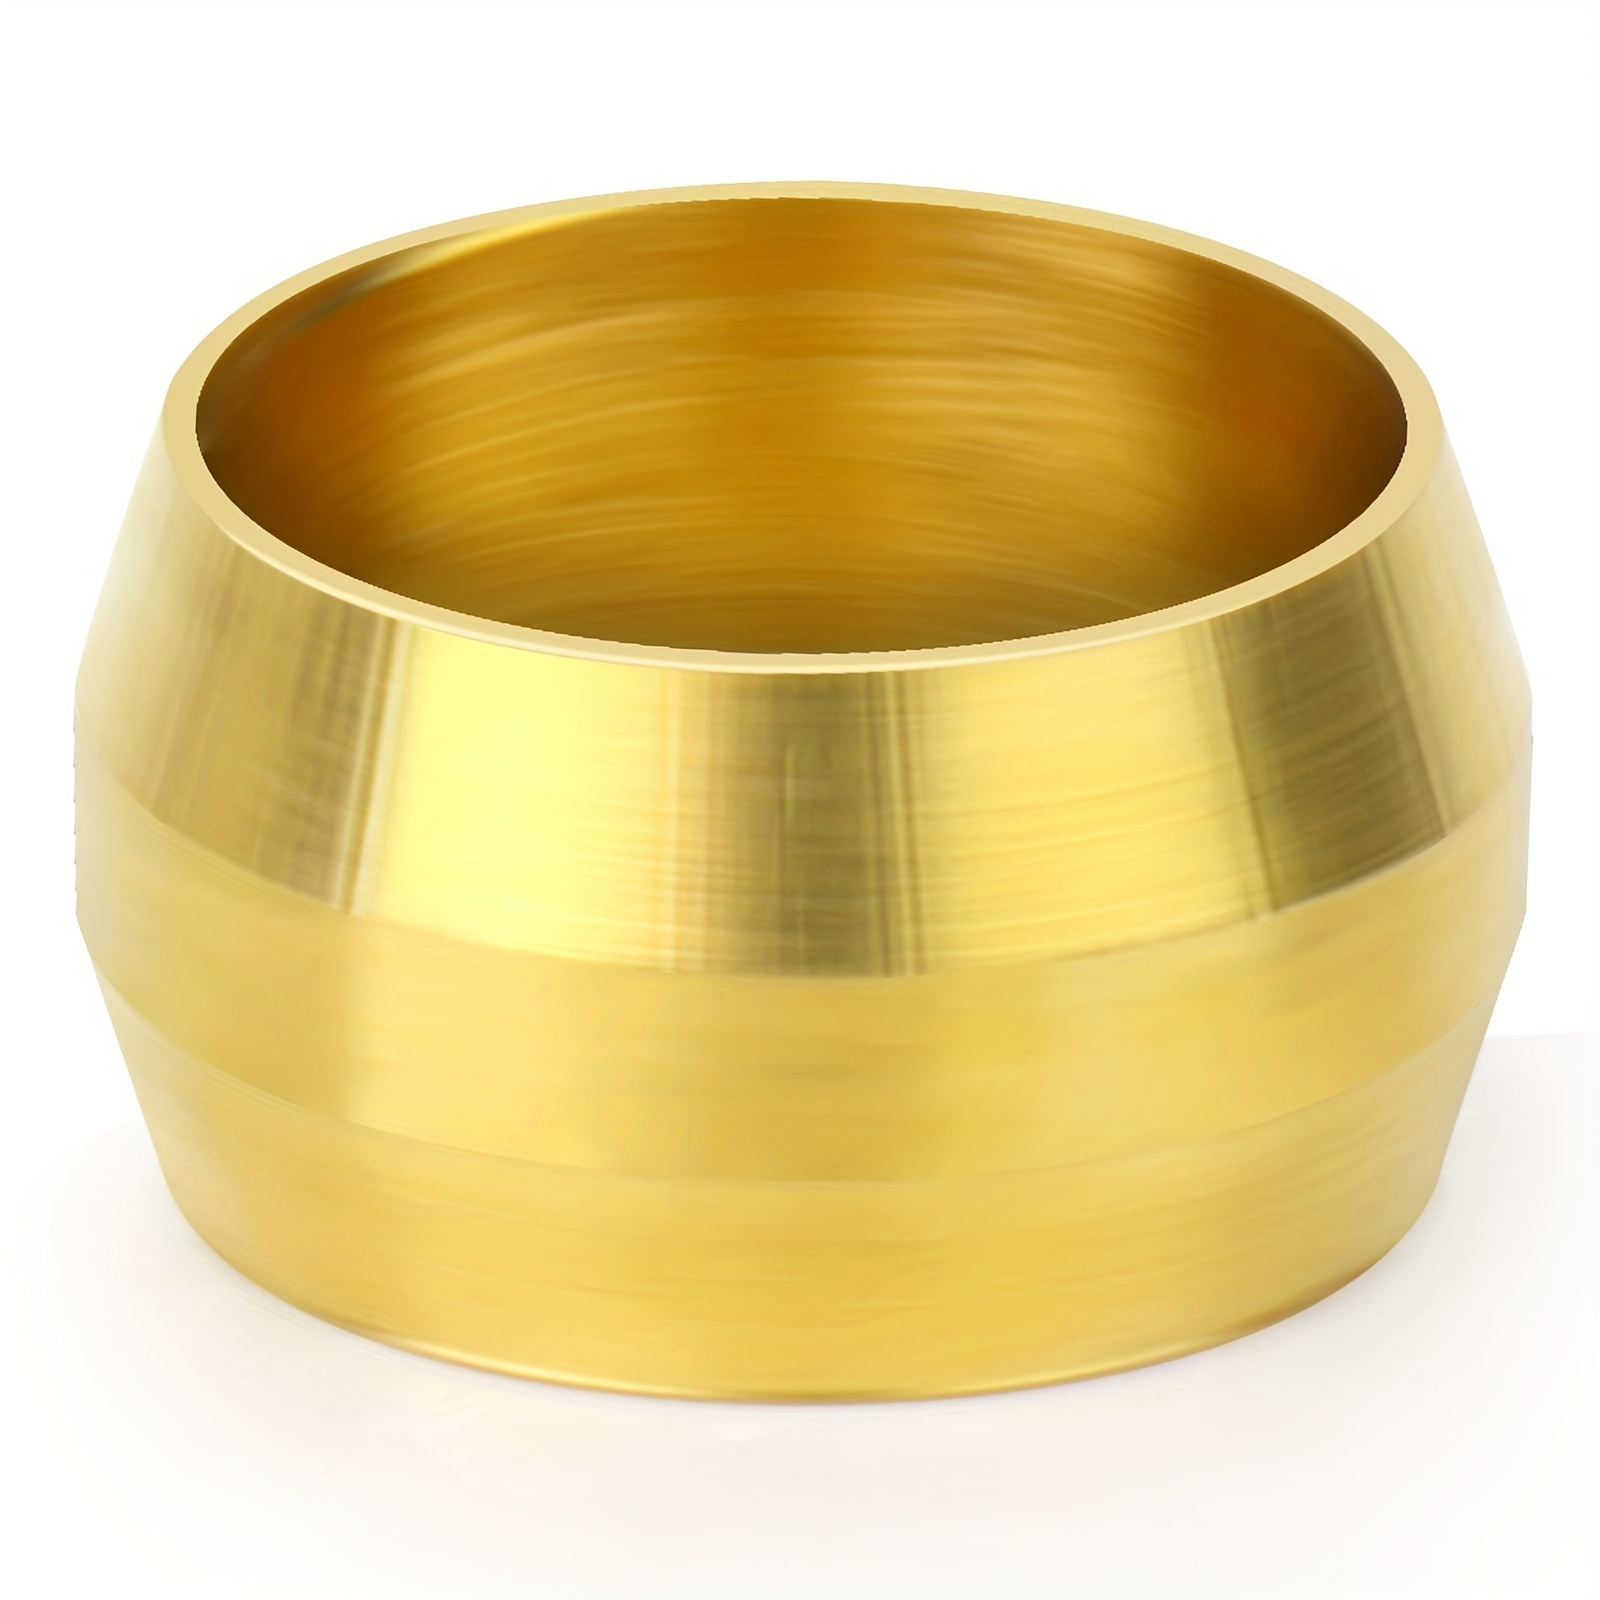 100pcs 4mm Tube OD Brass Compression Sleeves Ferrules Brass